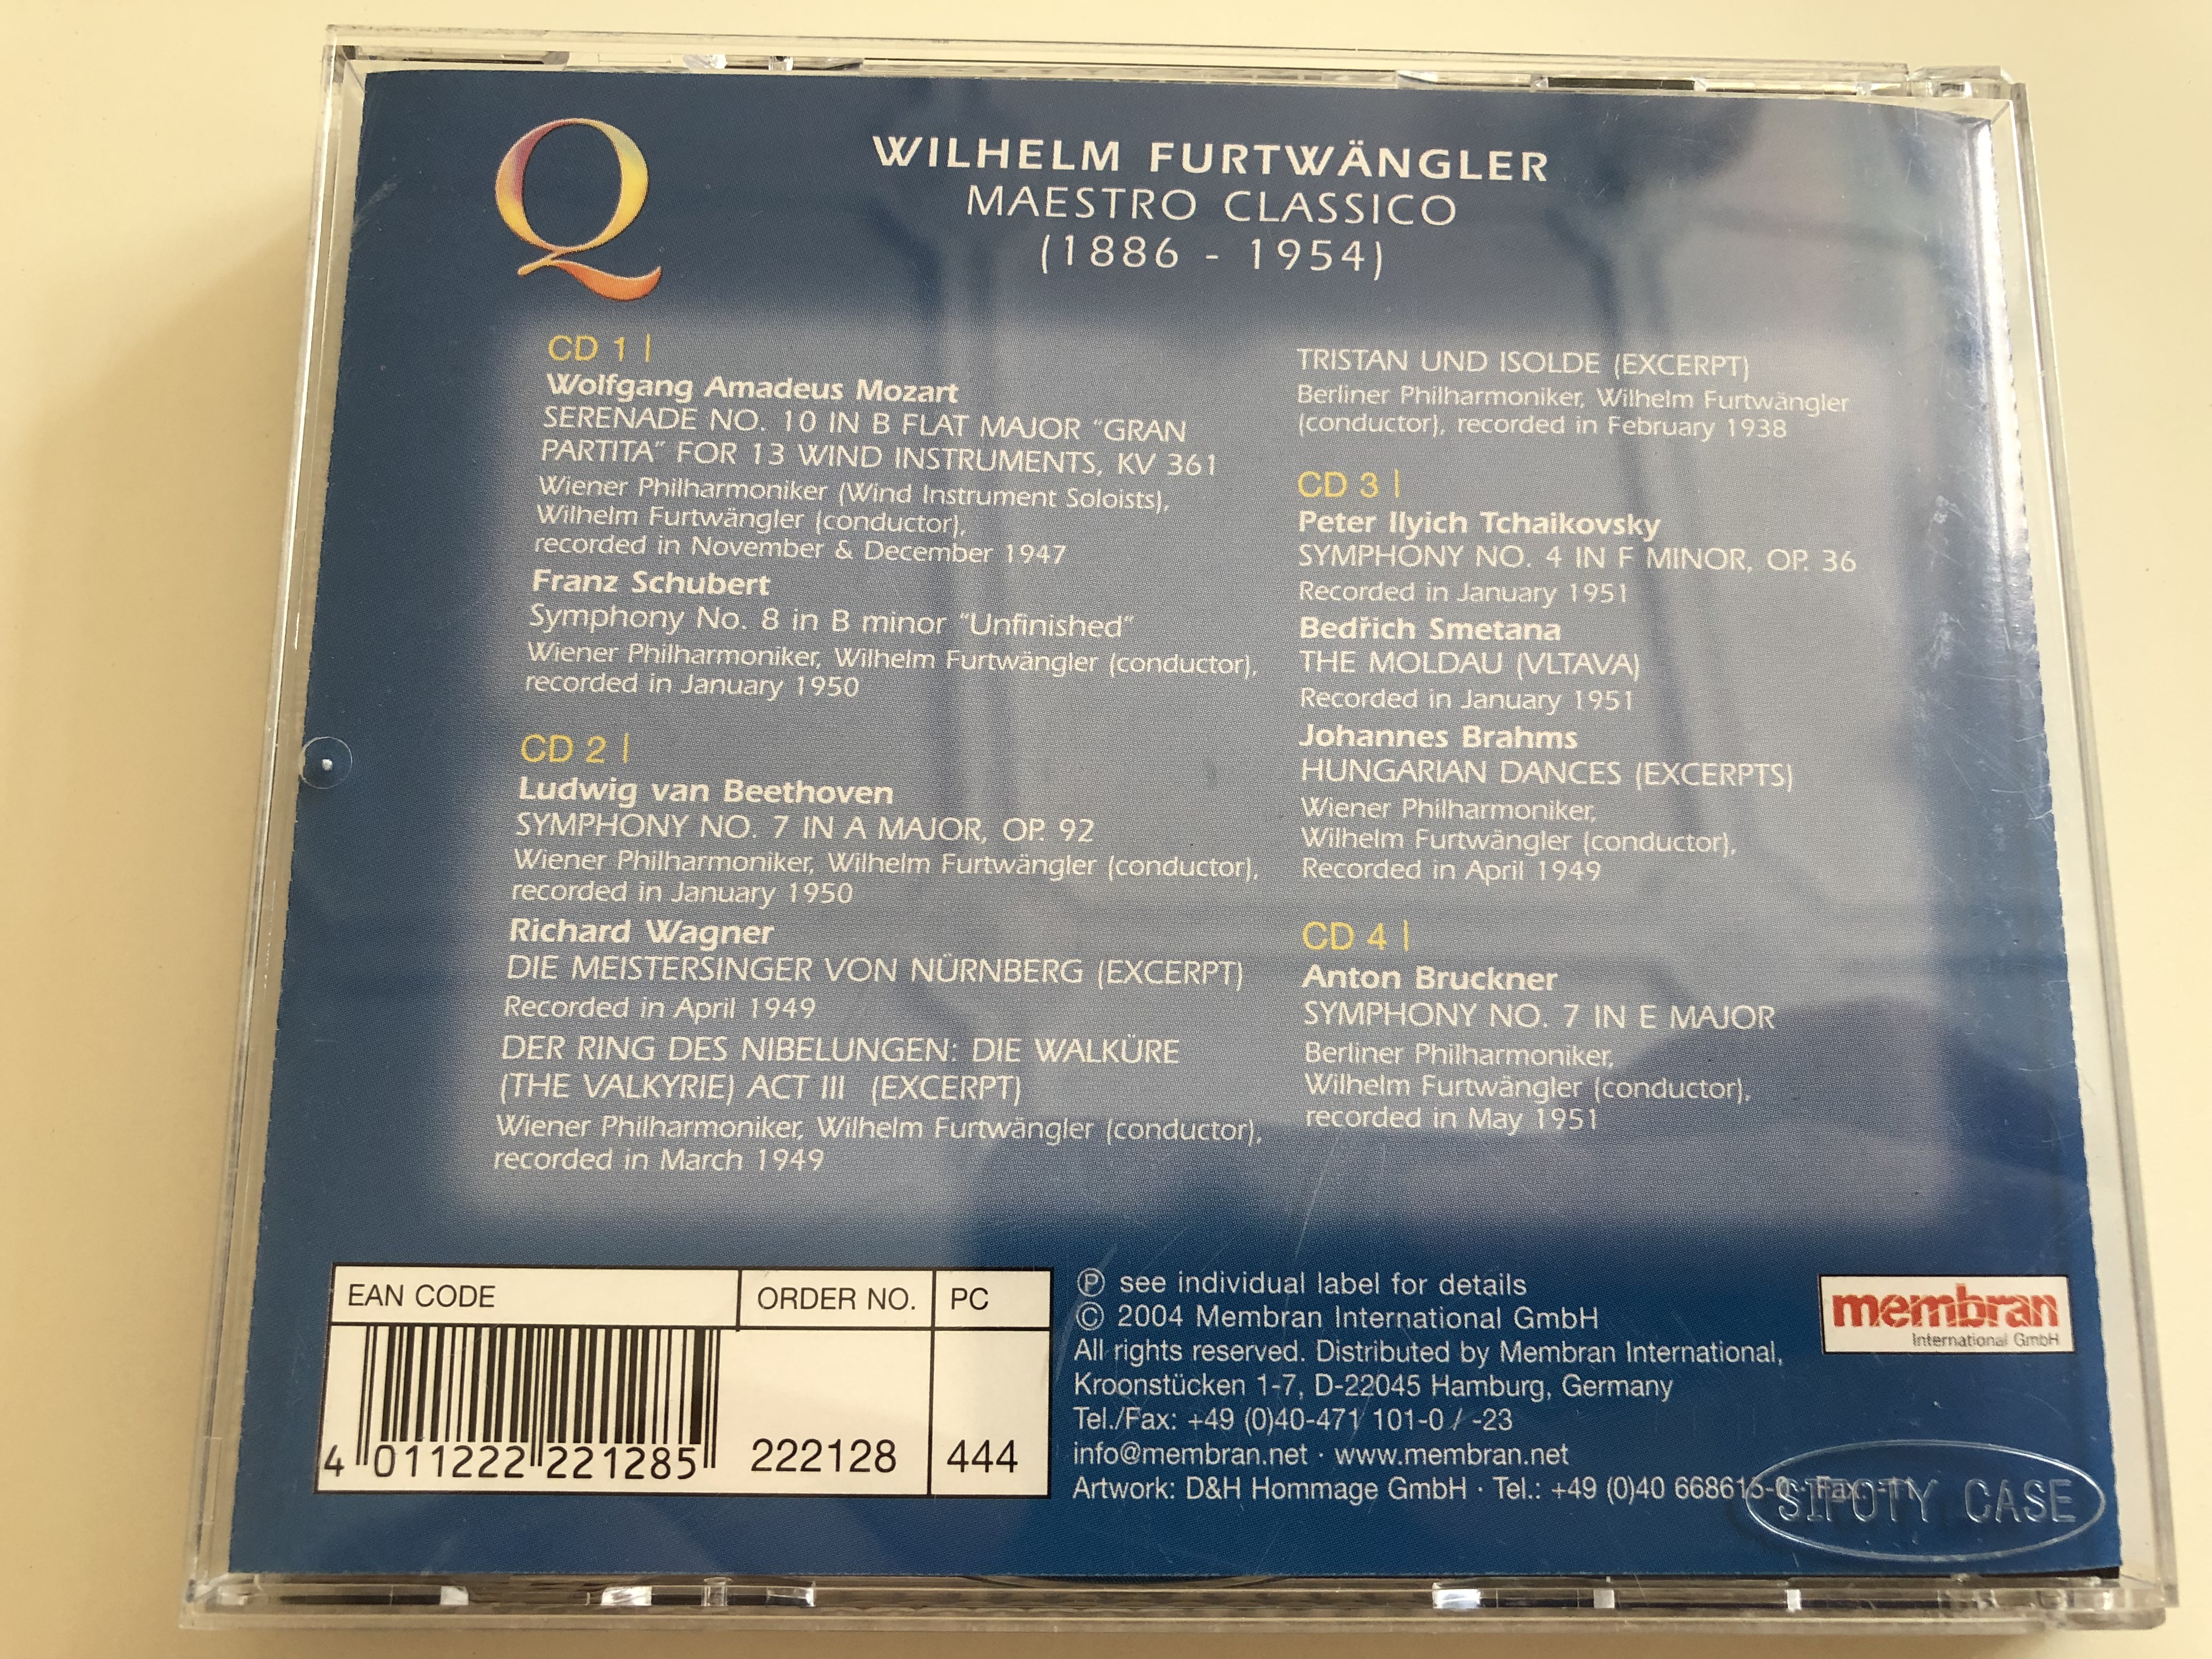 quadromania-wilhelm-furtw-ngler-maestro-classico-1886-1954-mozart-beethoven-tchaikovsky-smetana-bruckner-audio-cd-2004-4-cd-set-7-.jpg